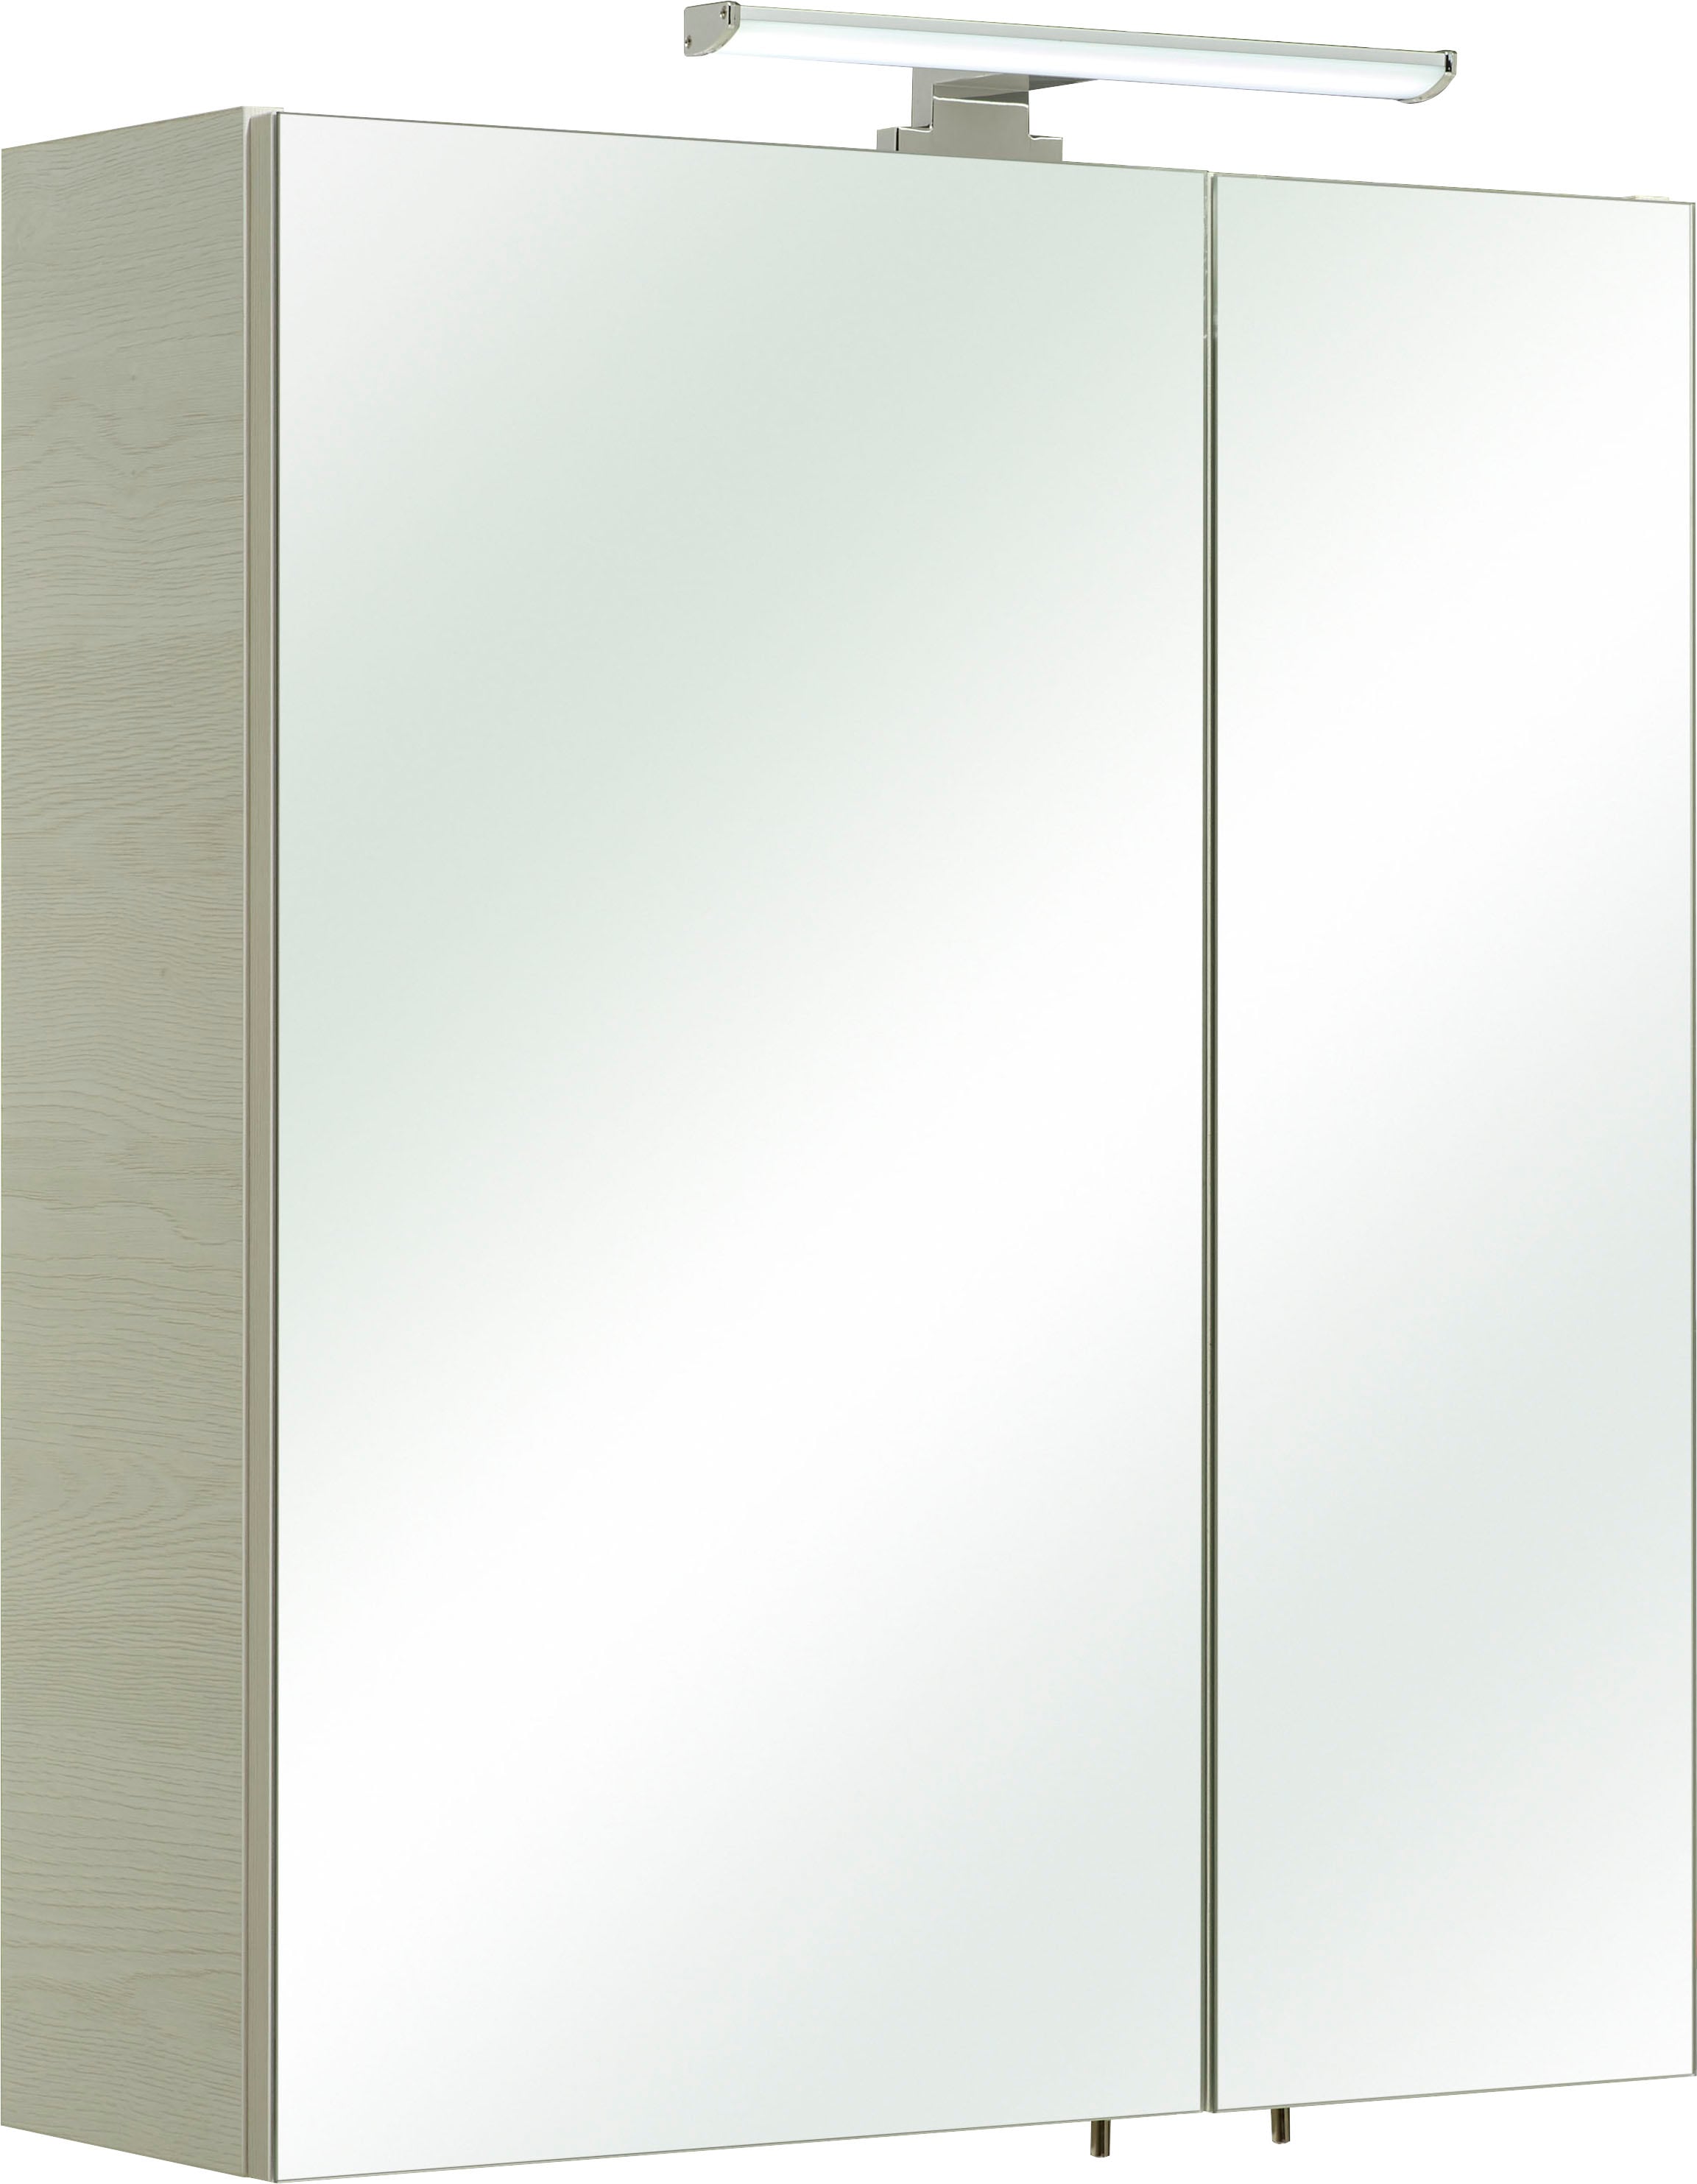 PELIPAL Beleuchtung, Breite »Quickset LED- online cm, bestellen Spiegelschrank 2-türig, Schalter-/Steckdosenbox 936«, 60